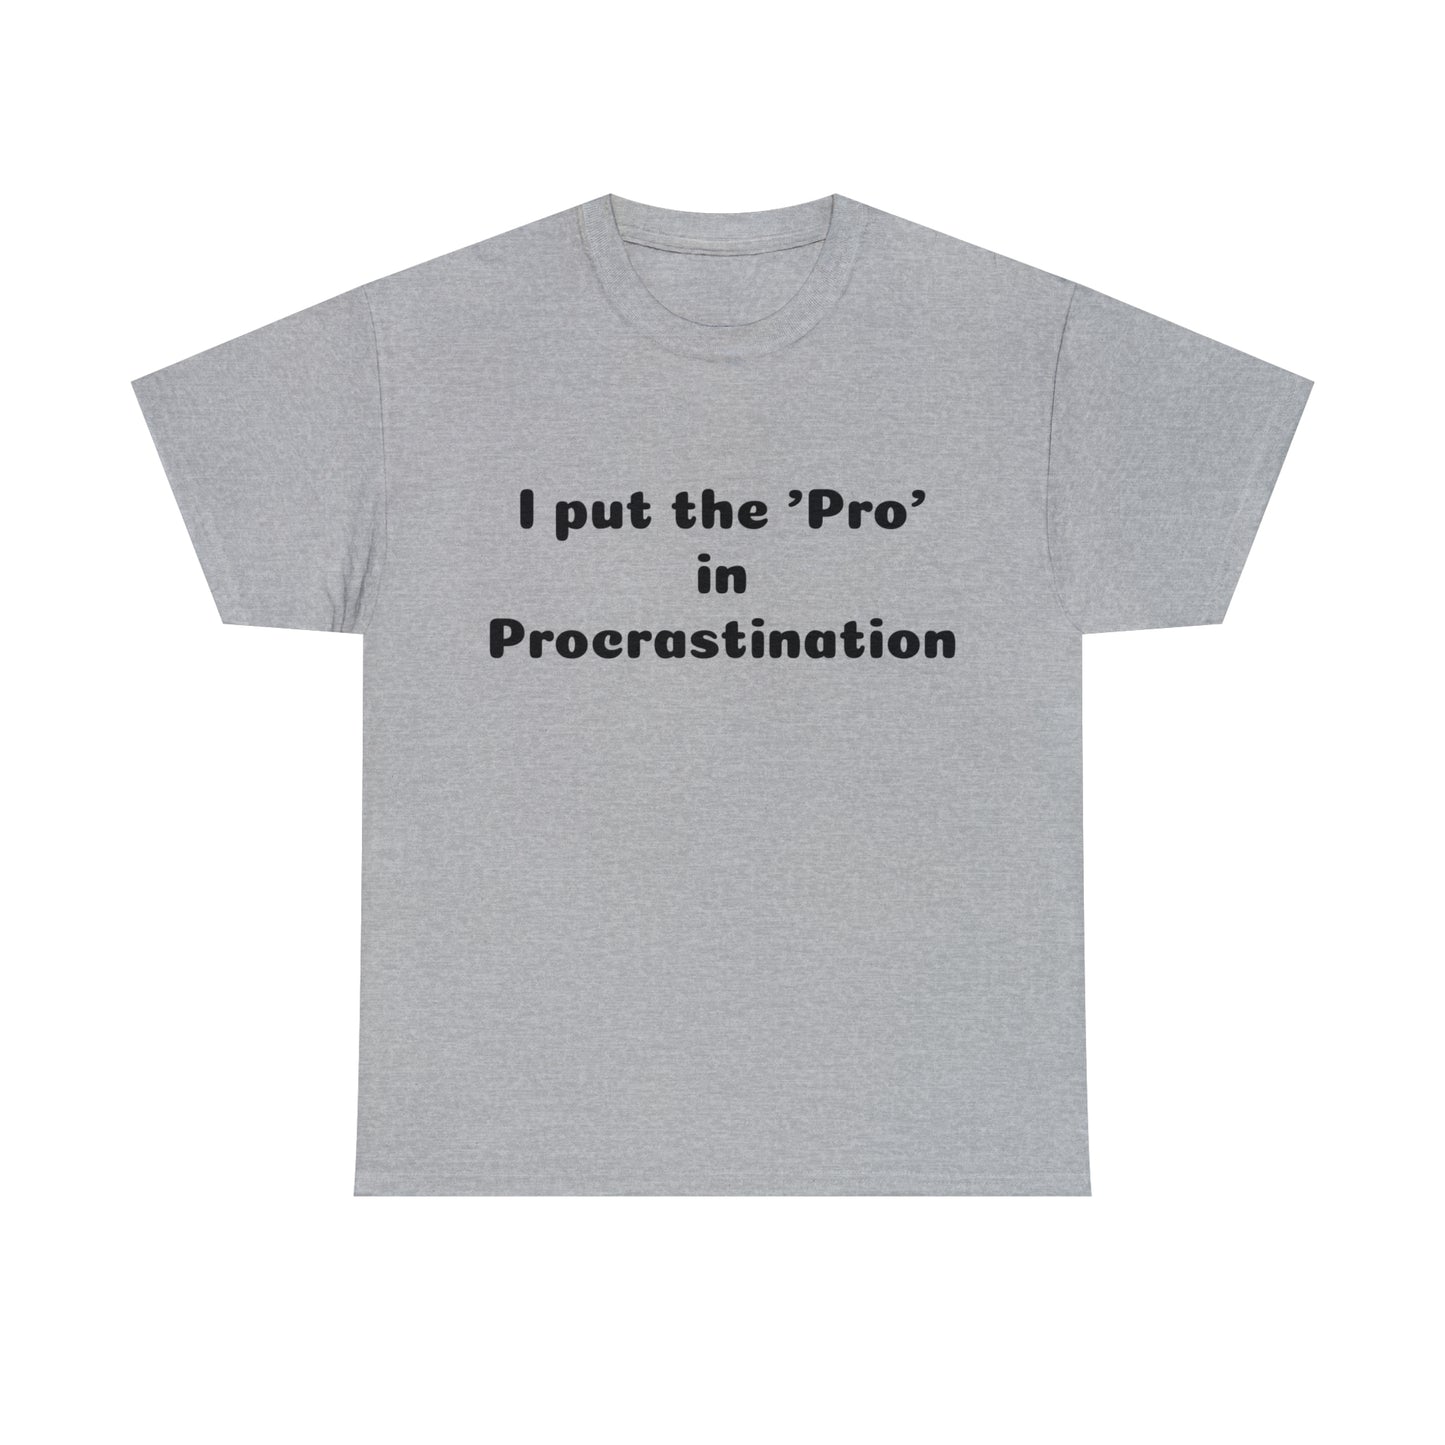 Custom Parody T-shirt, I put the Pro in Procrastination shirt design